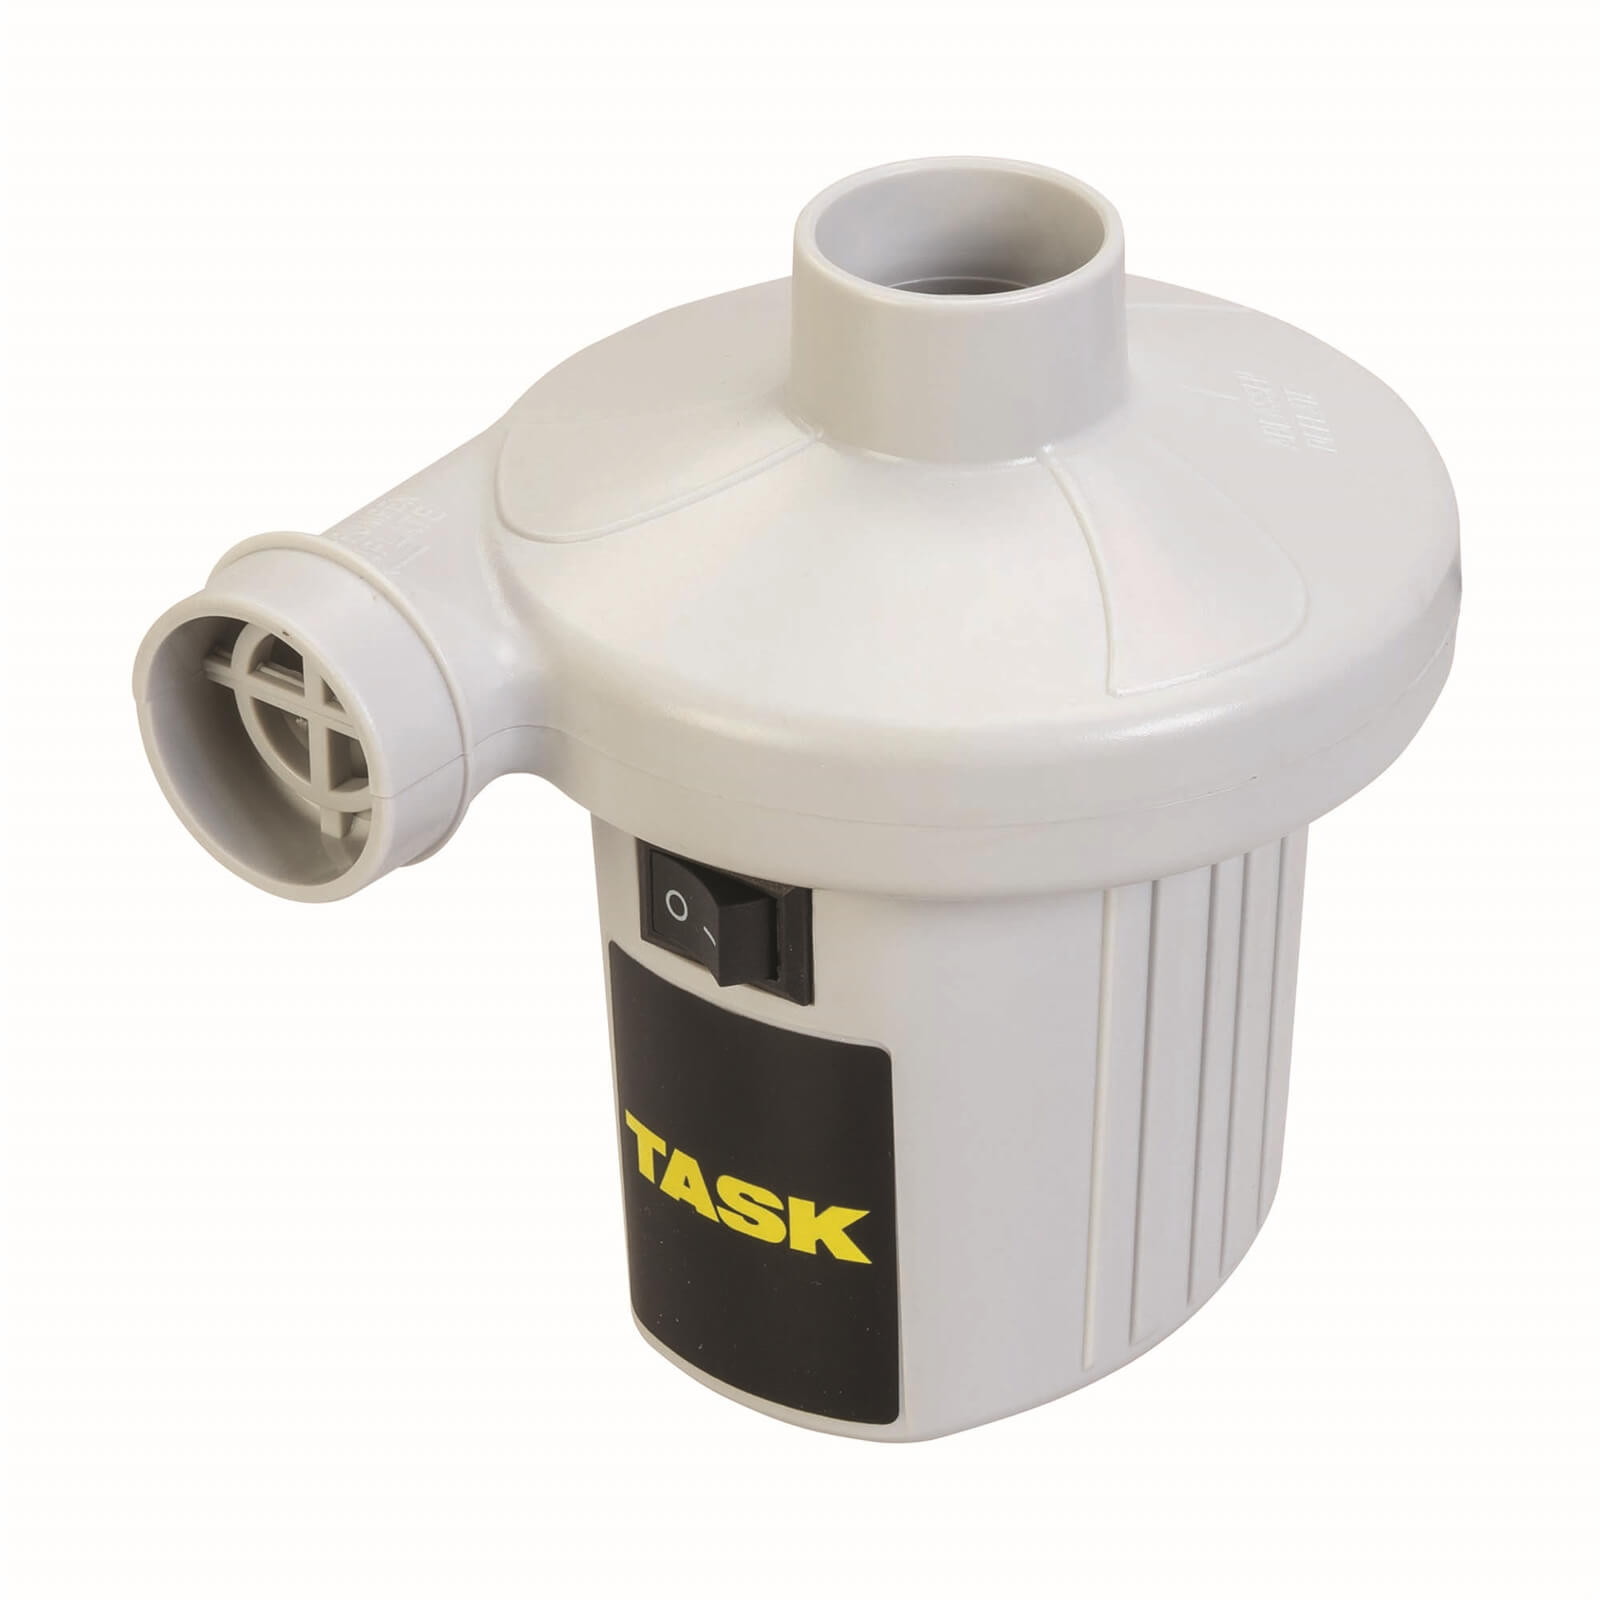 TASK 130W High-Volume Inflator Pump